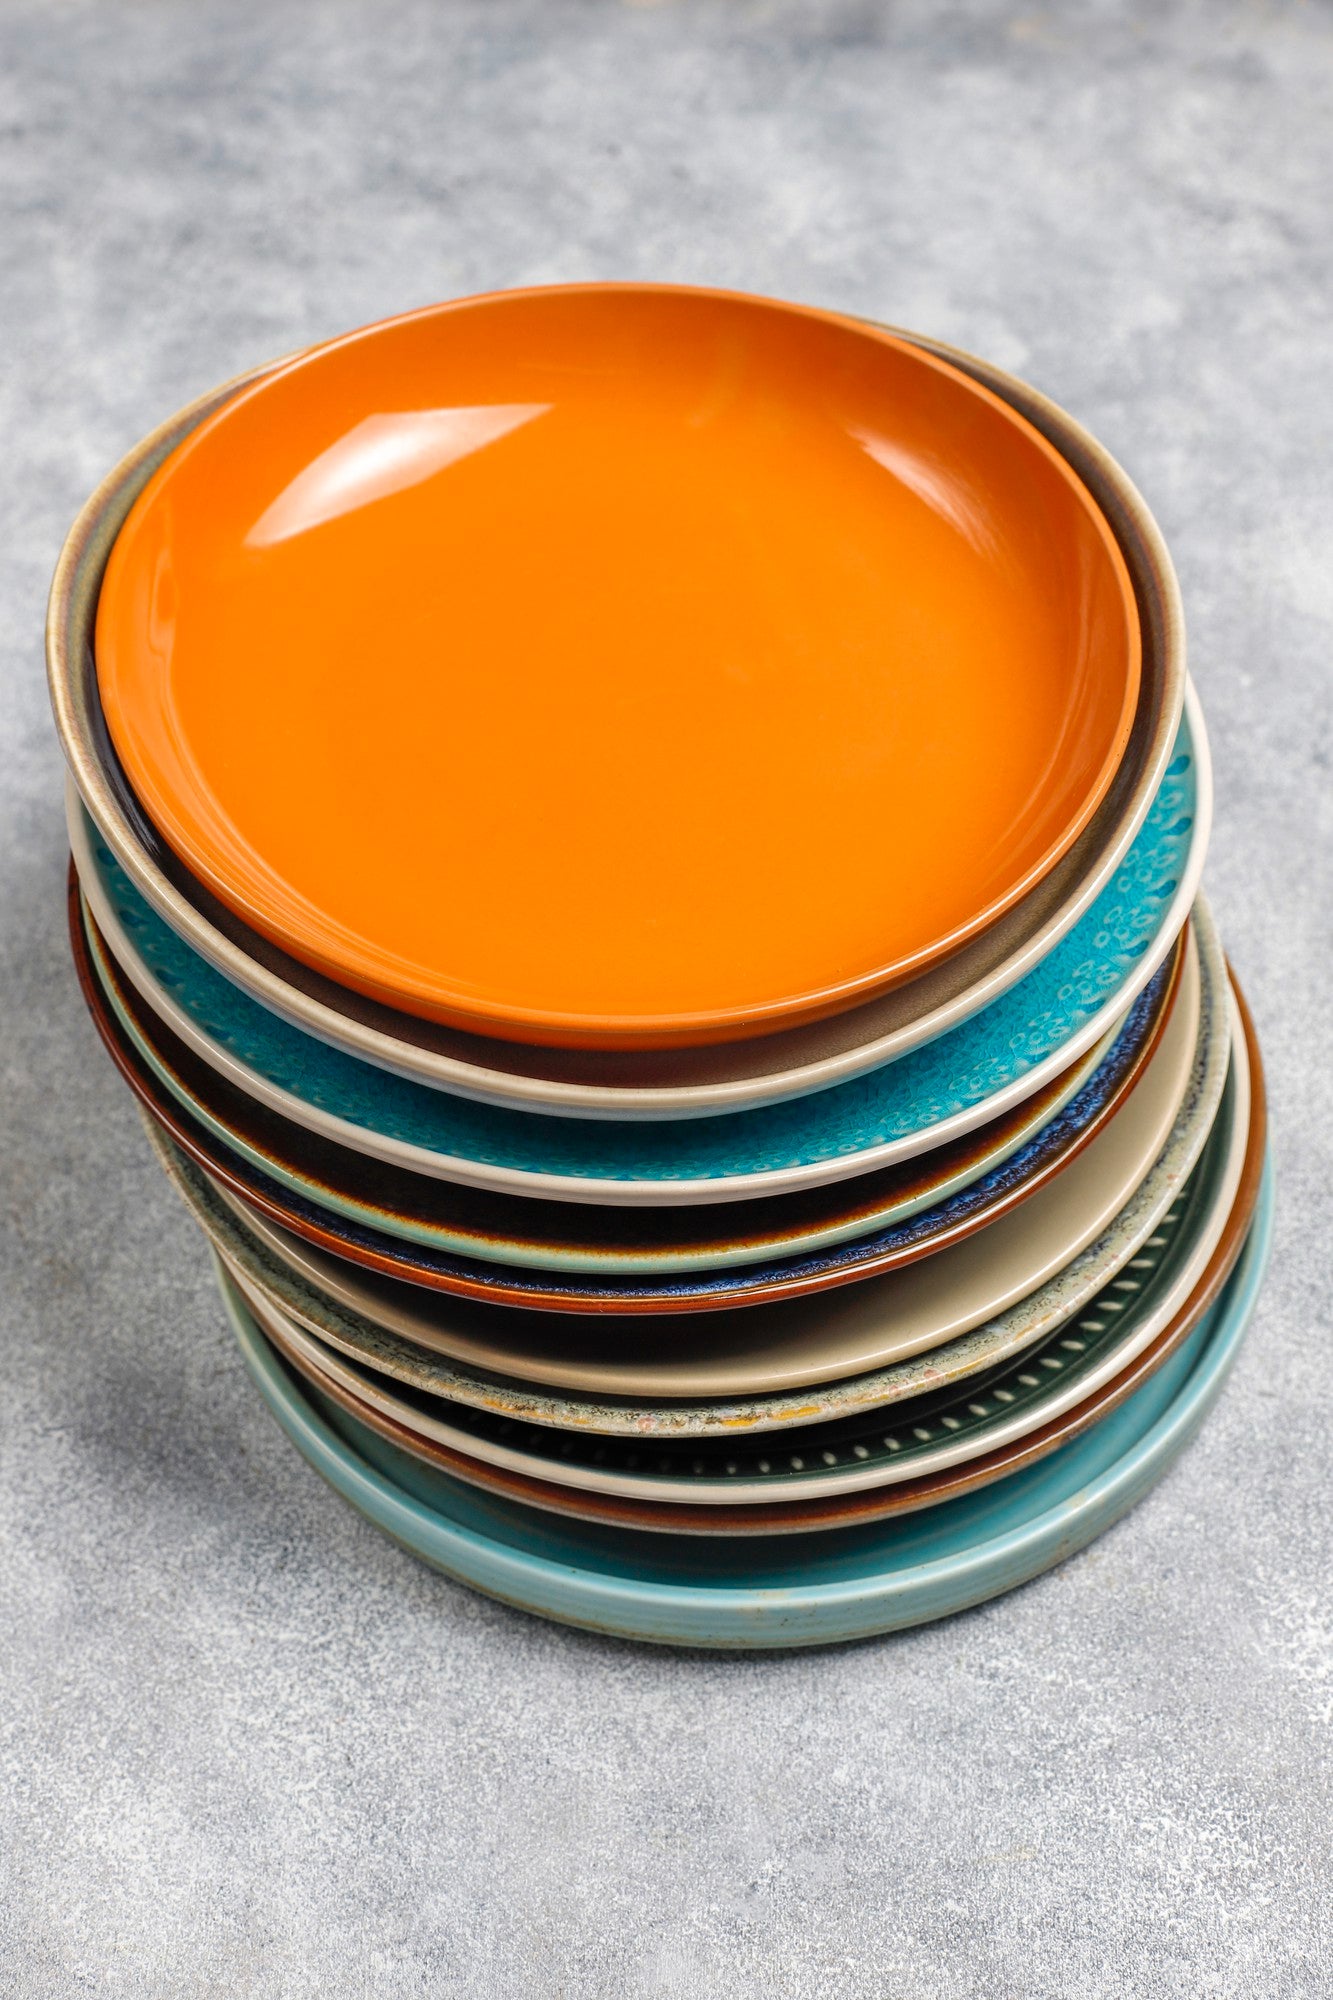 files/different-ceramic-empty-plates-bowls.jpg